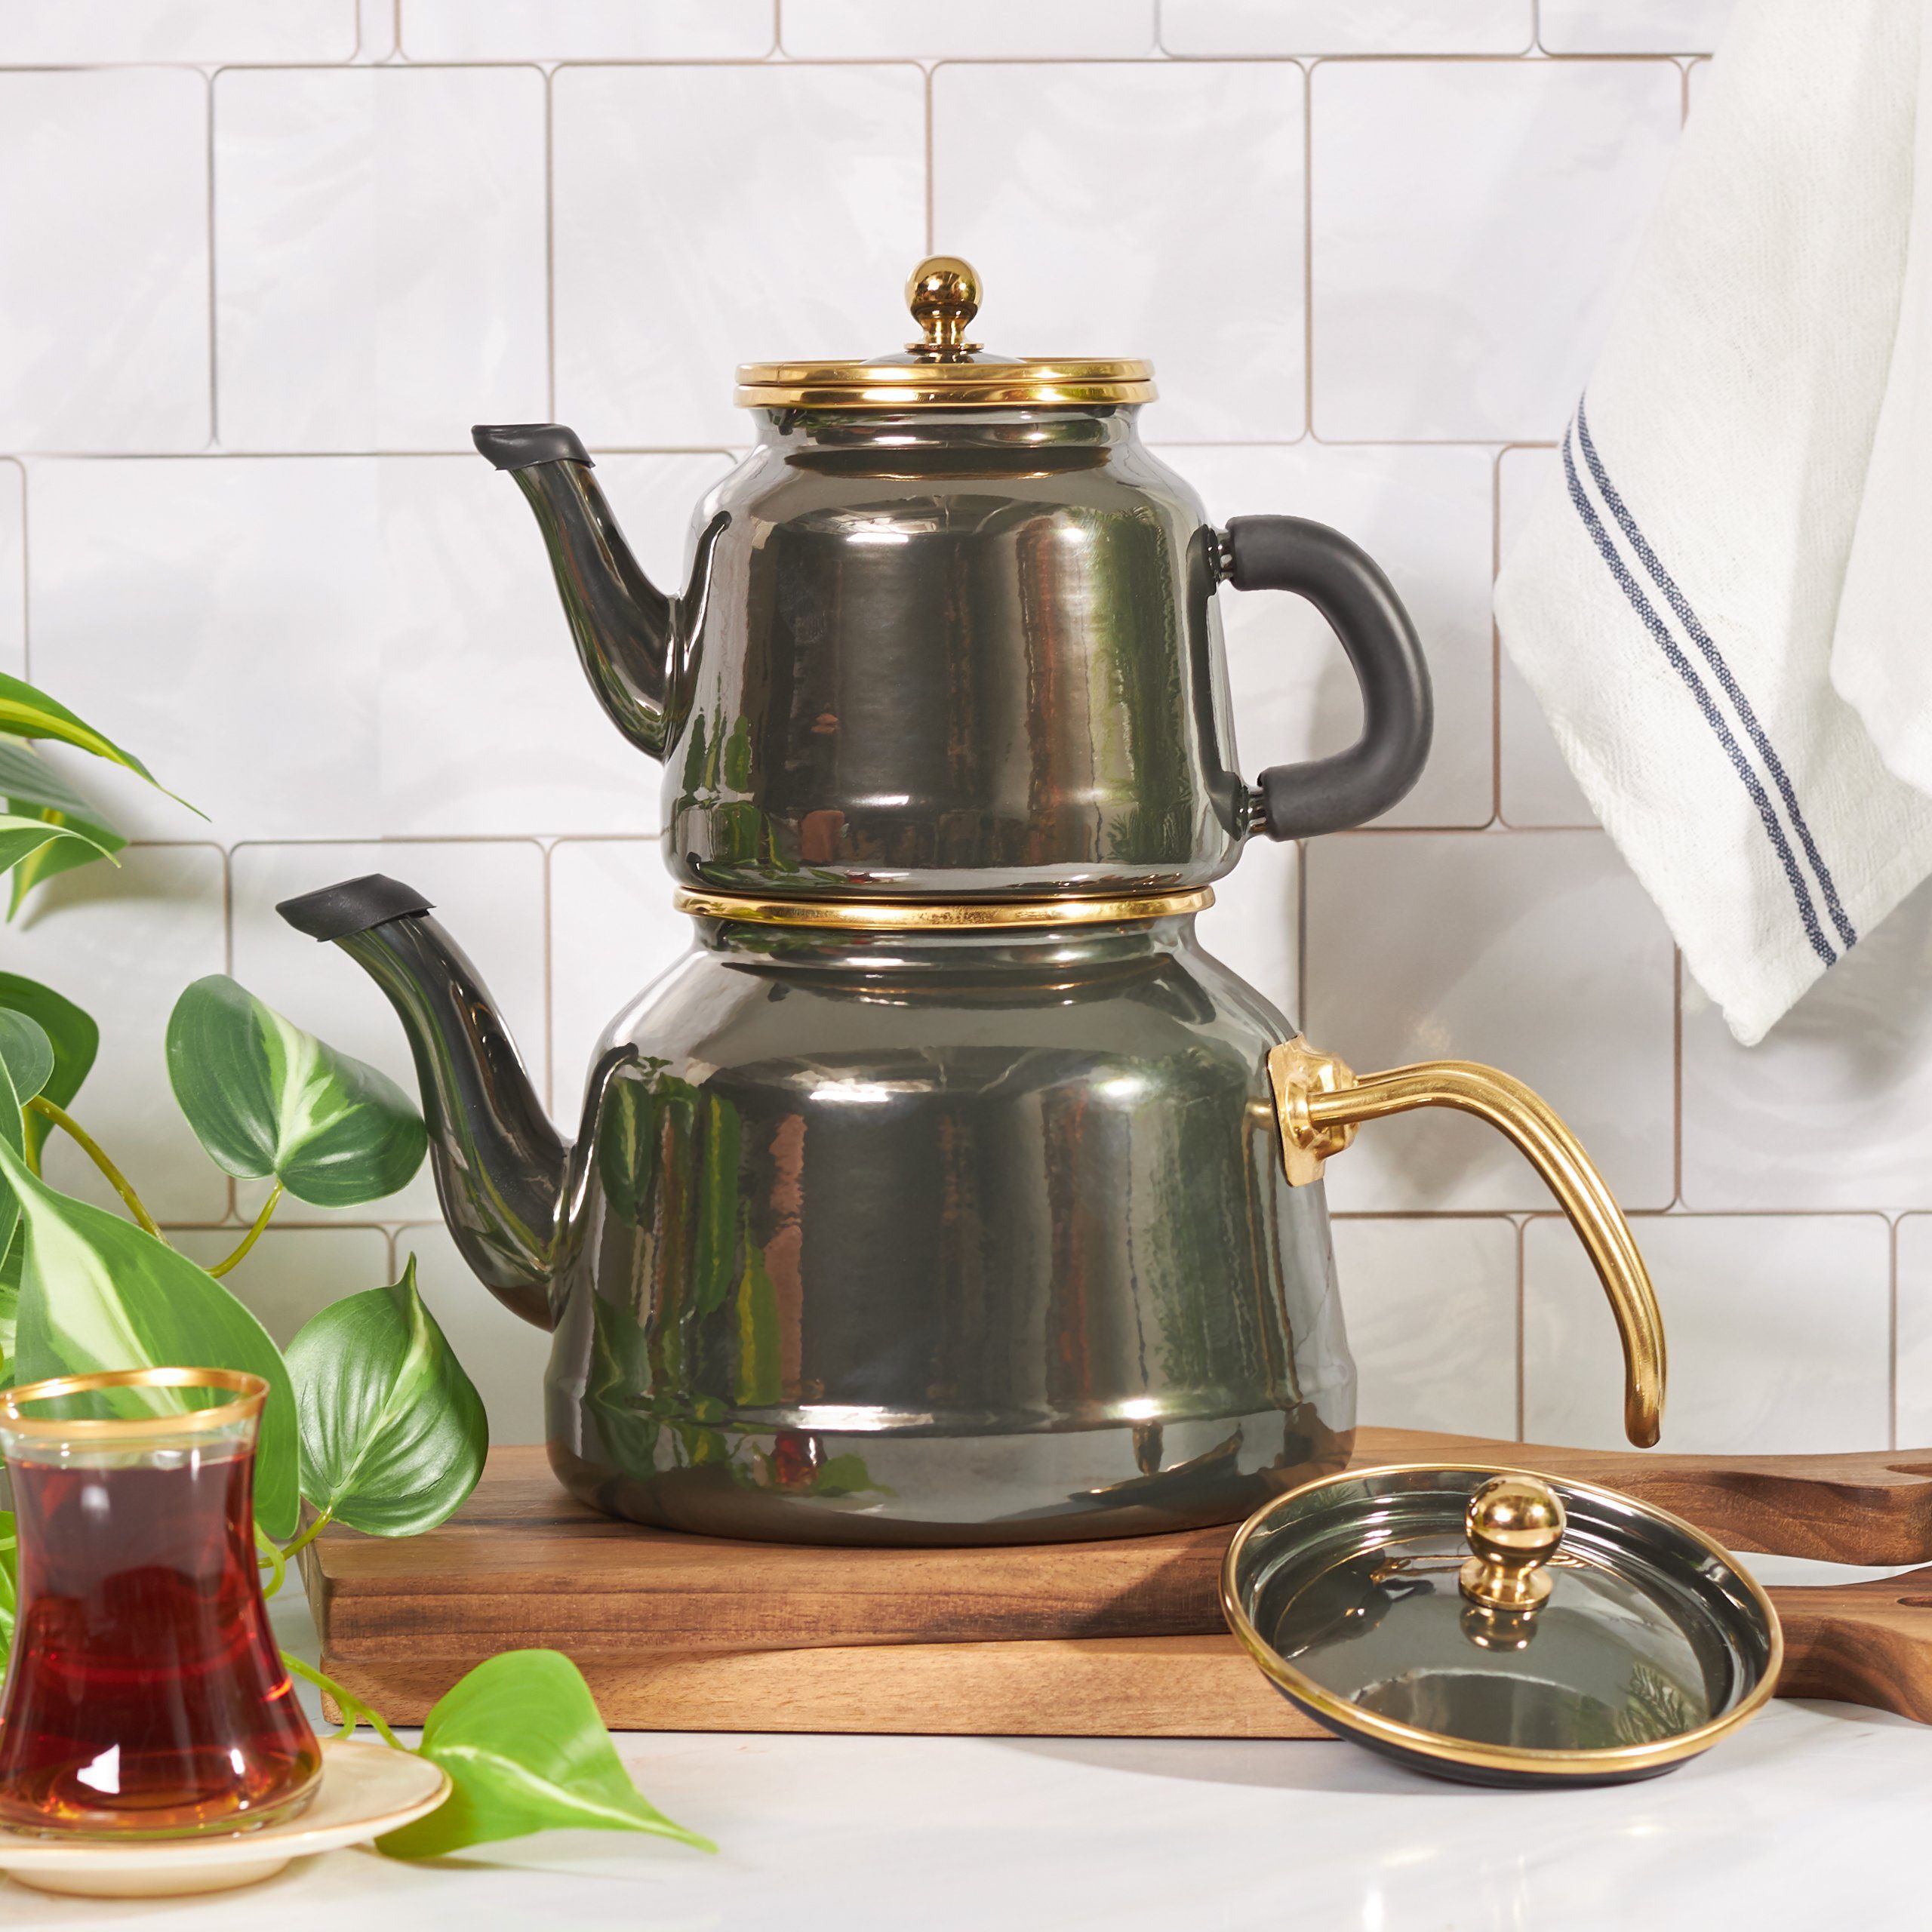 Karaca Teekanne Karaca Troy Schwarz Teekannen Set, Tee, Tea, Tea Maker Türkische  Teekanne, Tea Pot